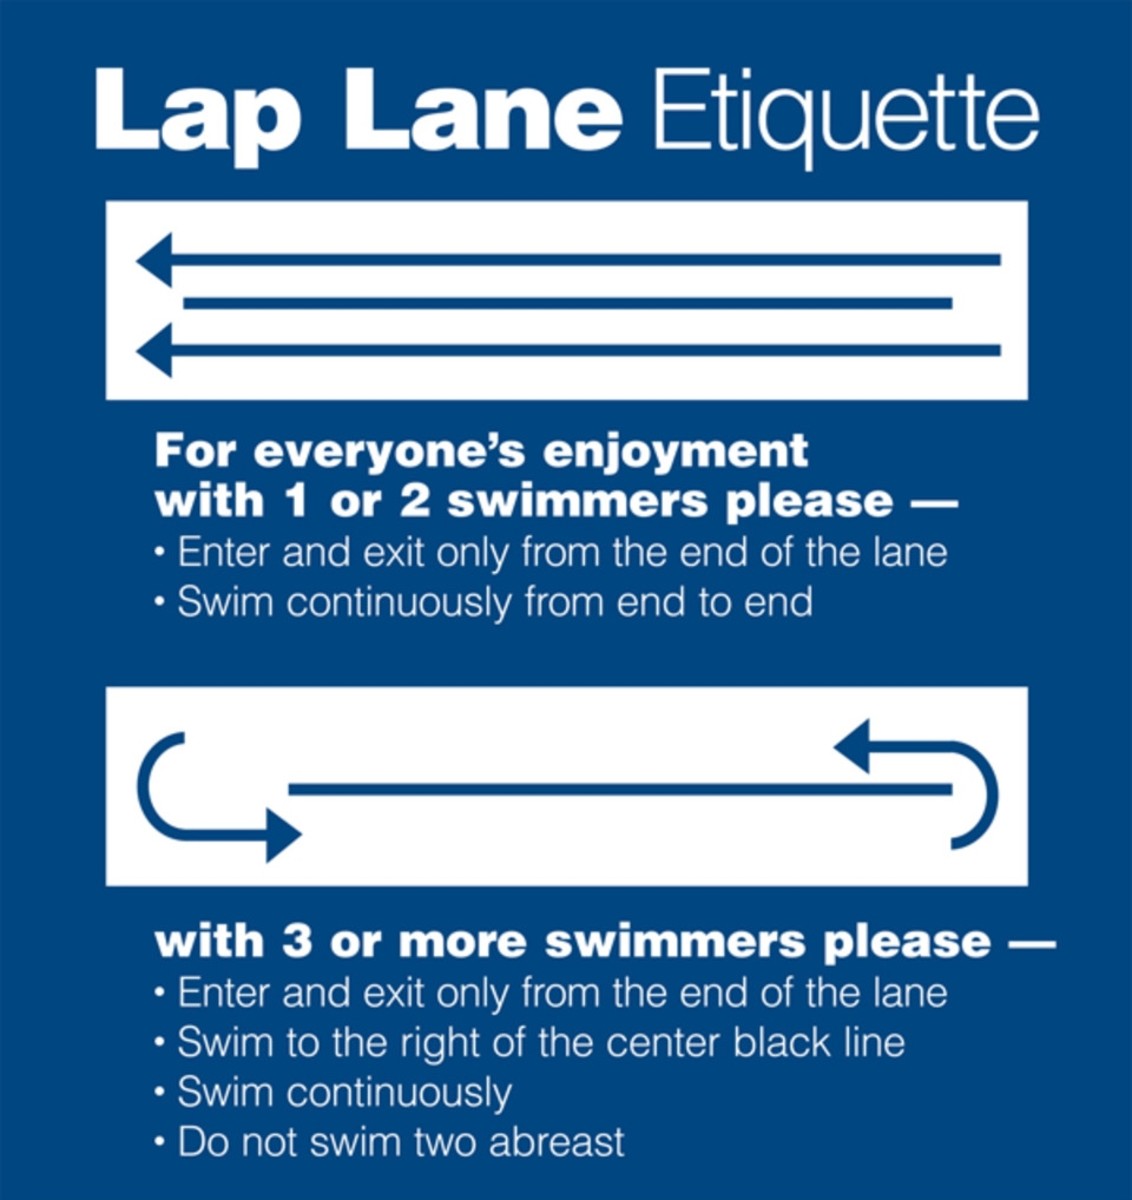 A sign explaining lap lane etiquette. Seems pretty straightforward.